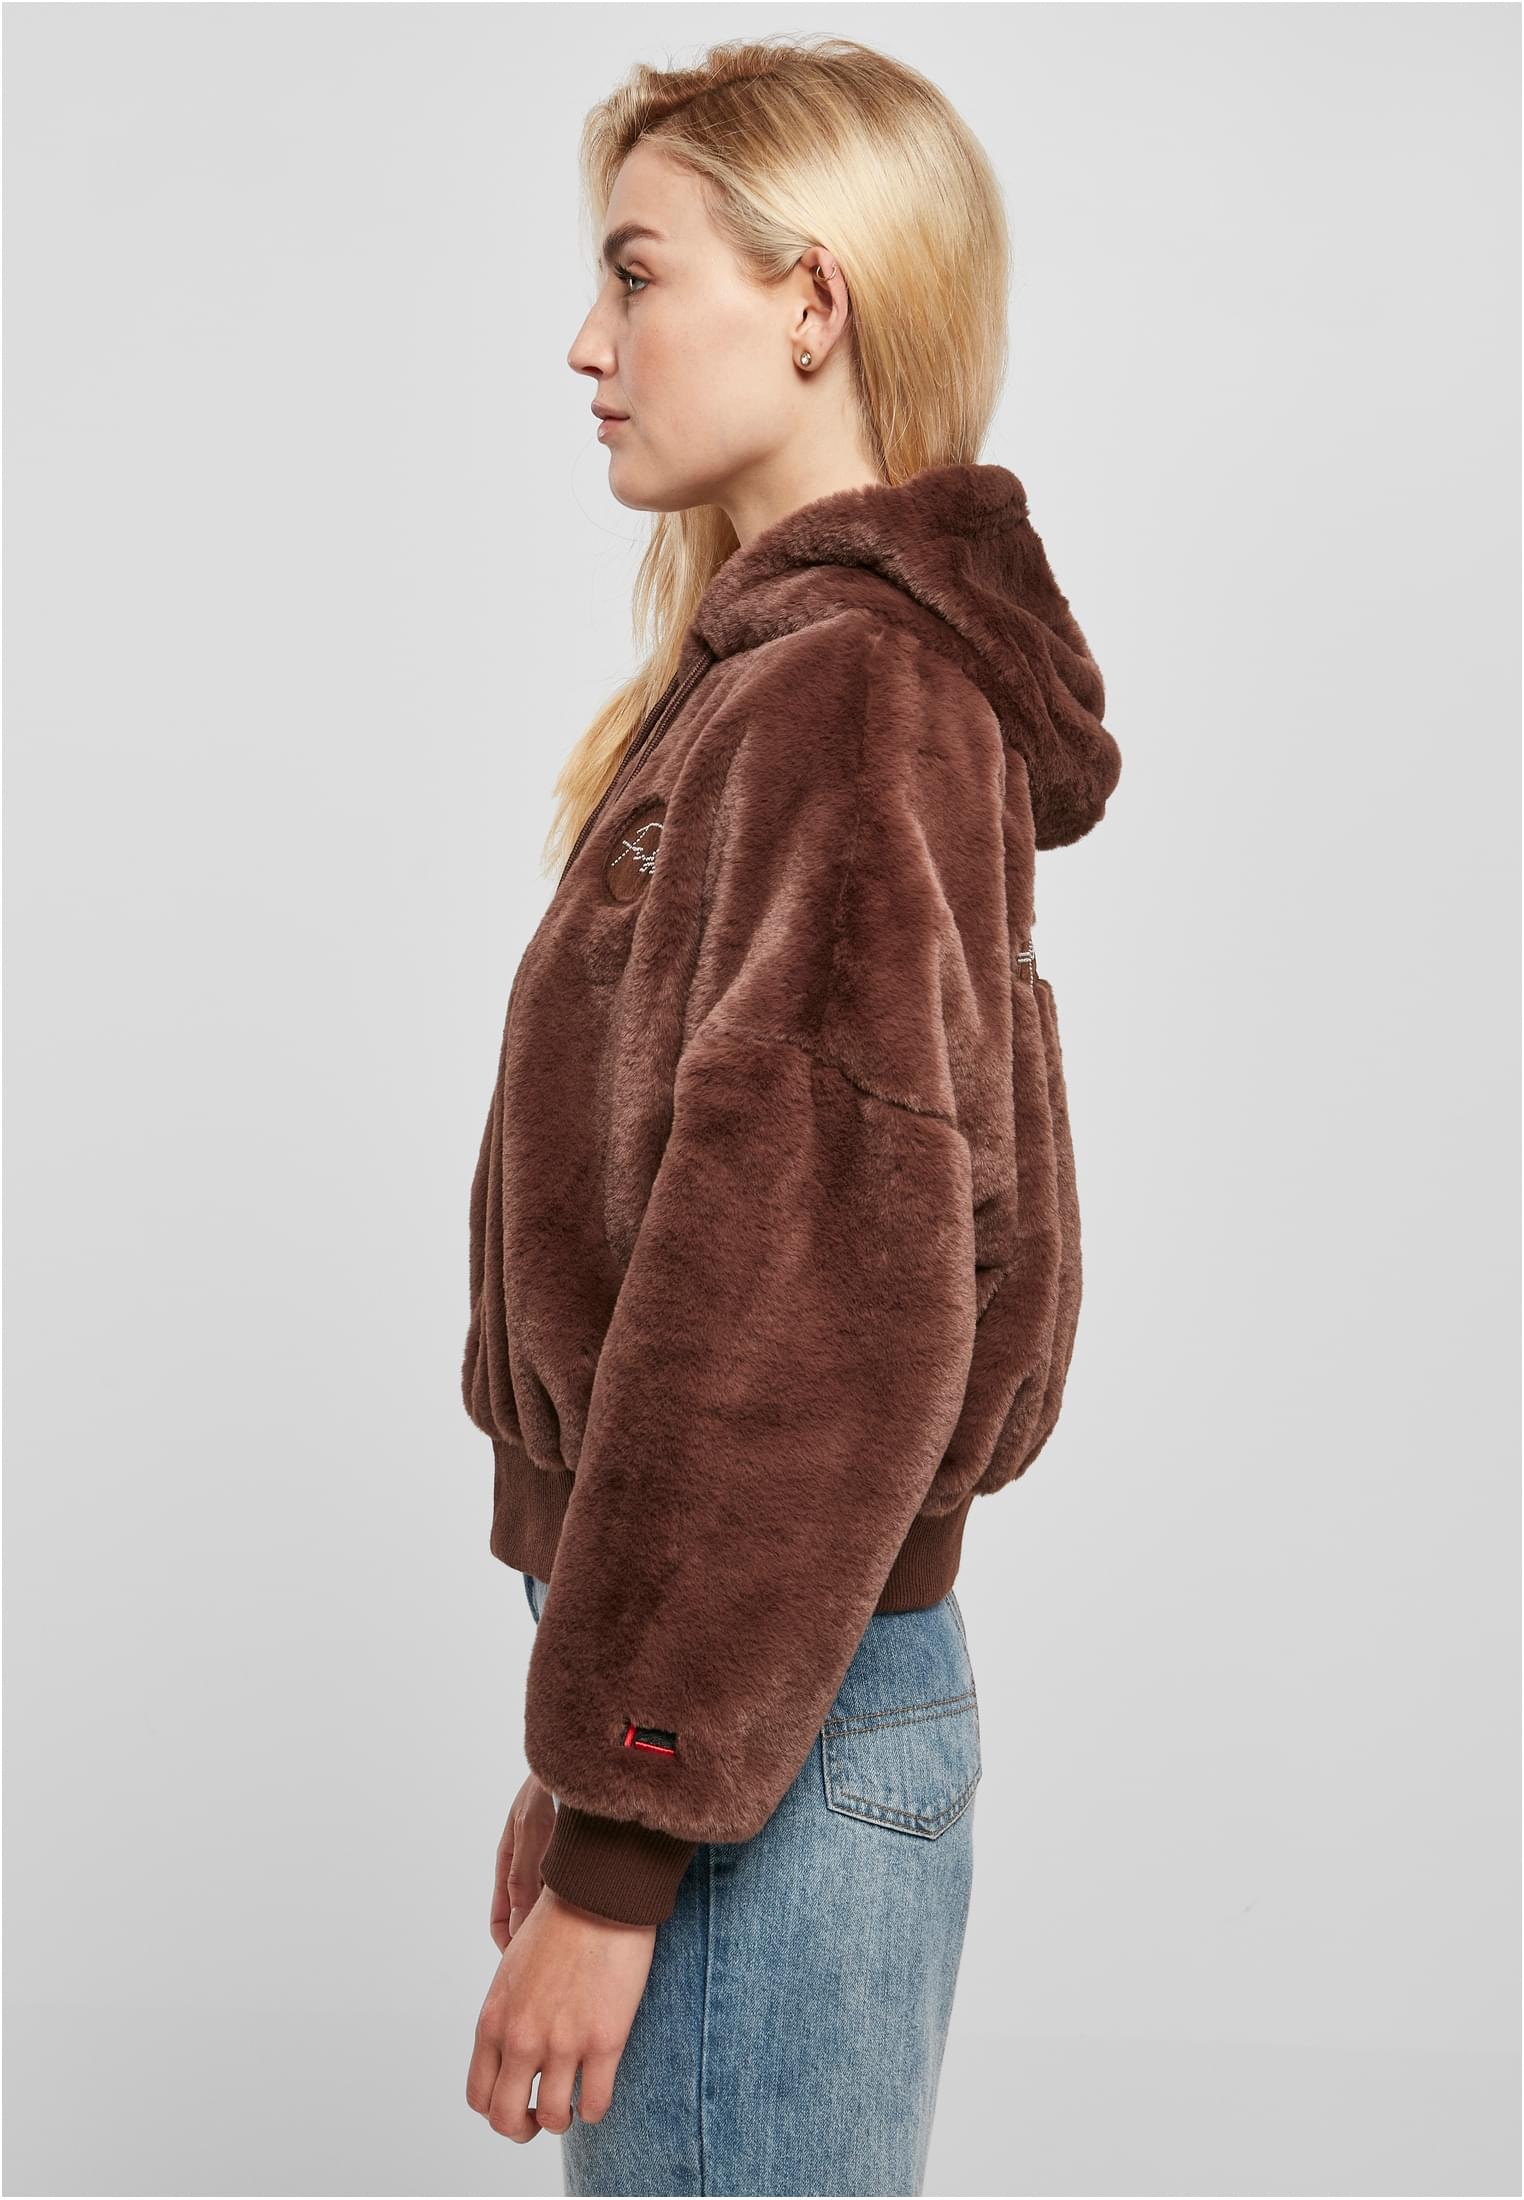 »Damen (1 Signature Kapuze kaufen Fubu Sommerjacke BAUR | Fur Jacket brown«, FW224-022-1 St.), ohne Rhinestone